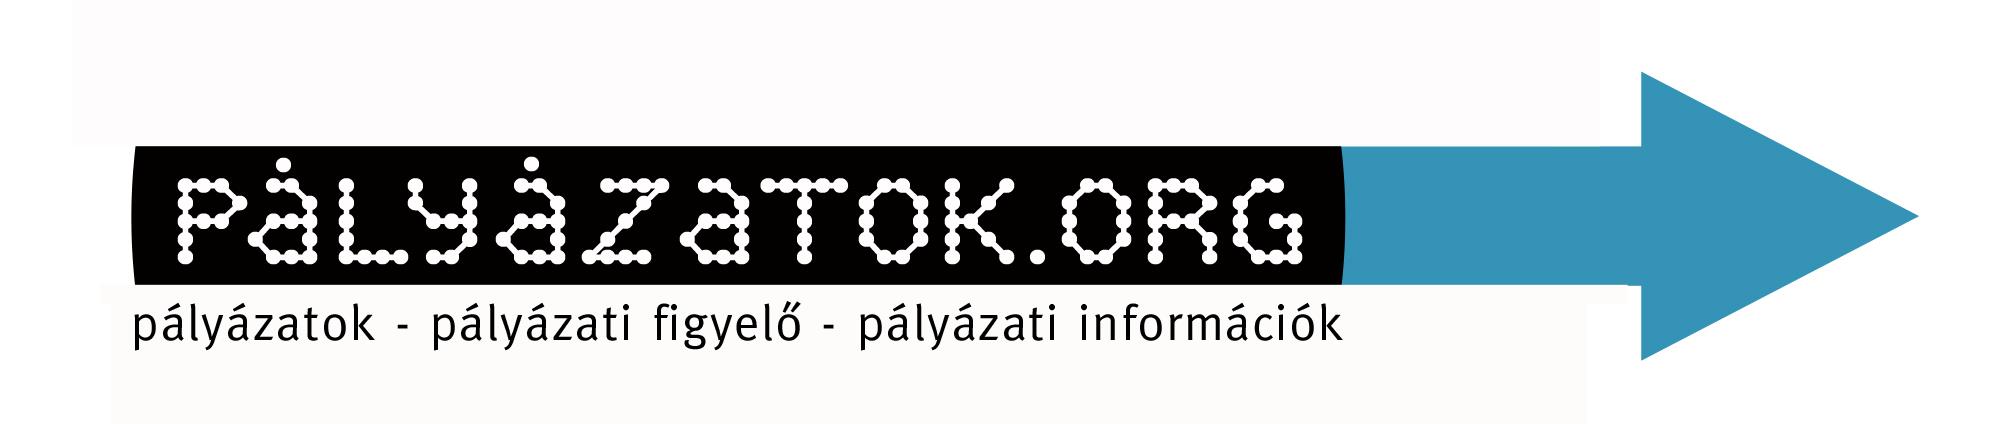 palyazatok.org logo2